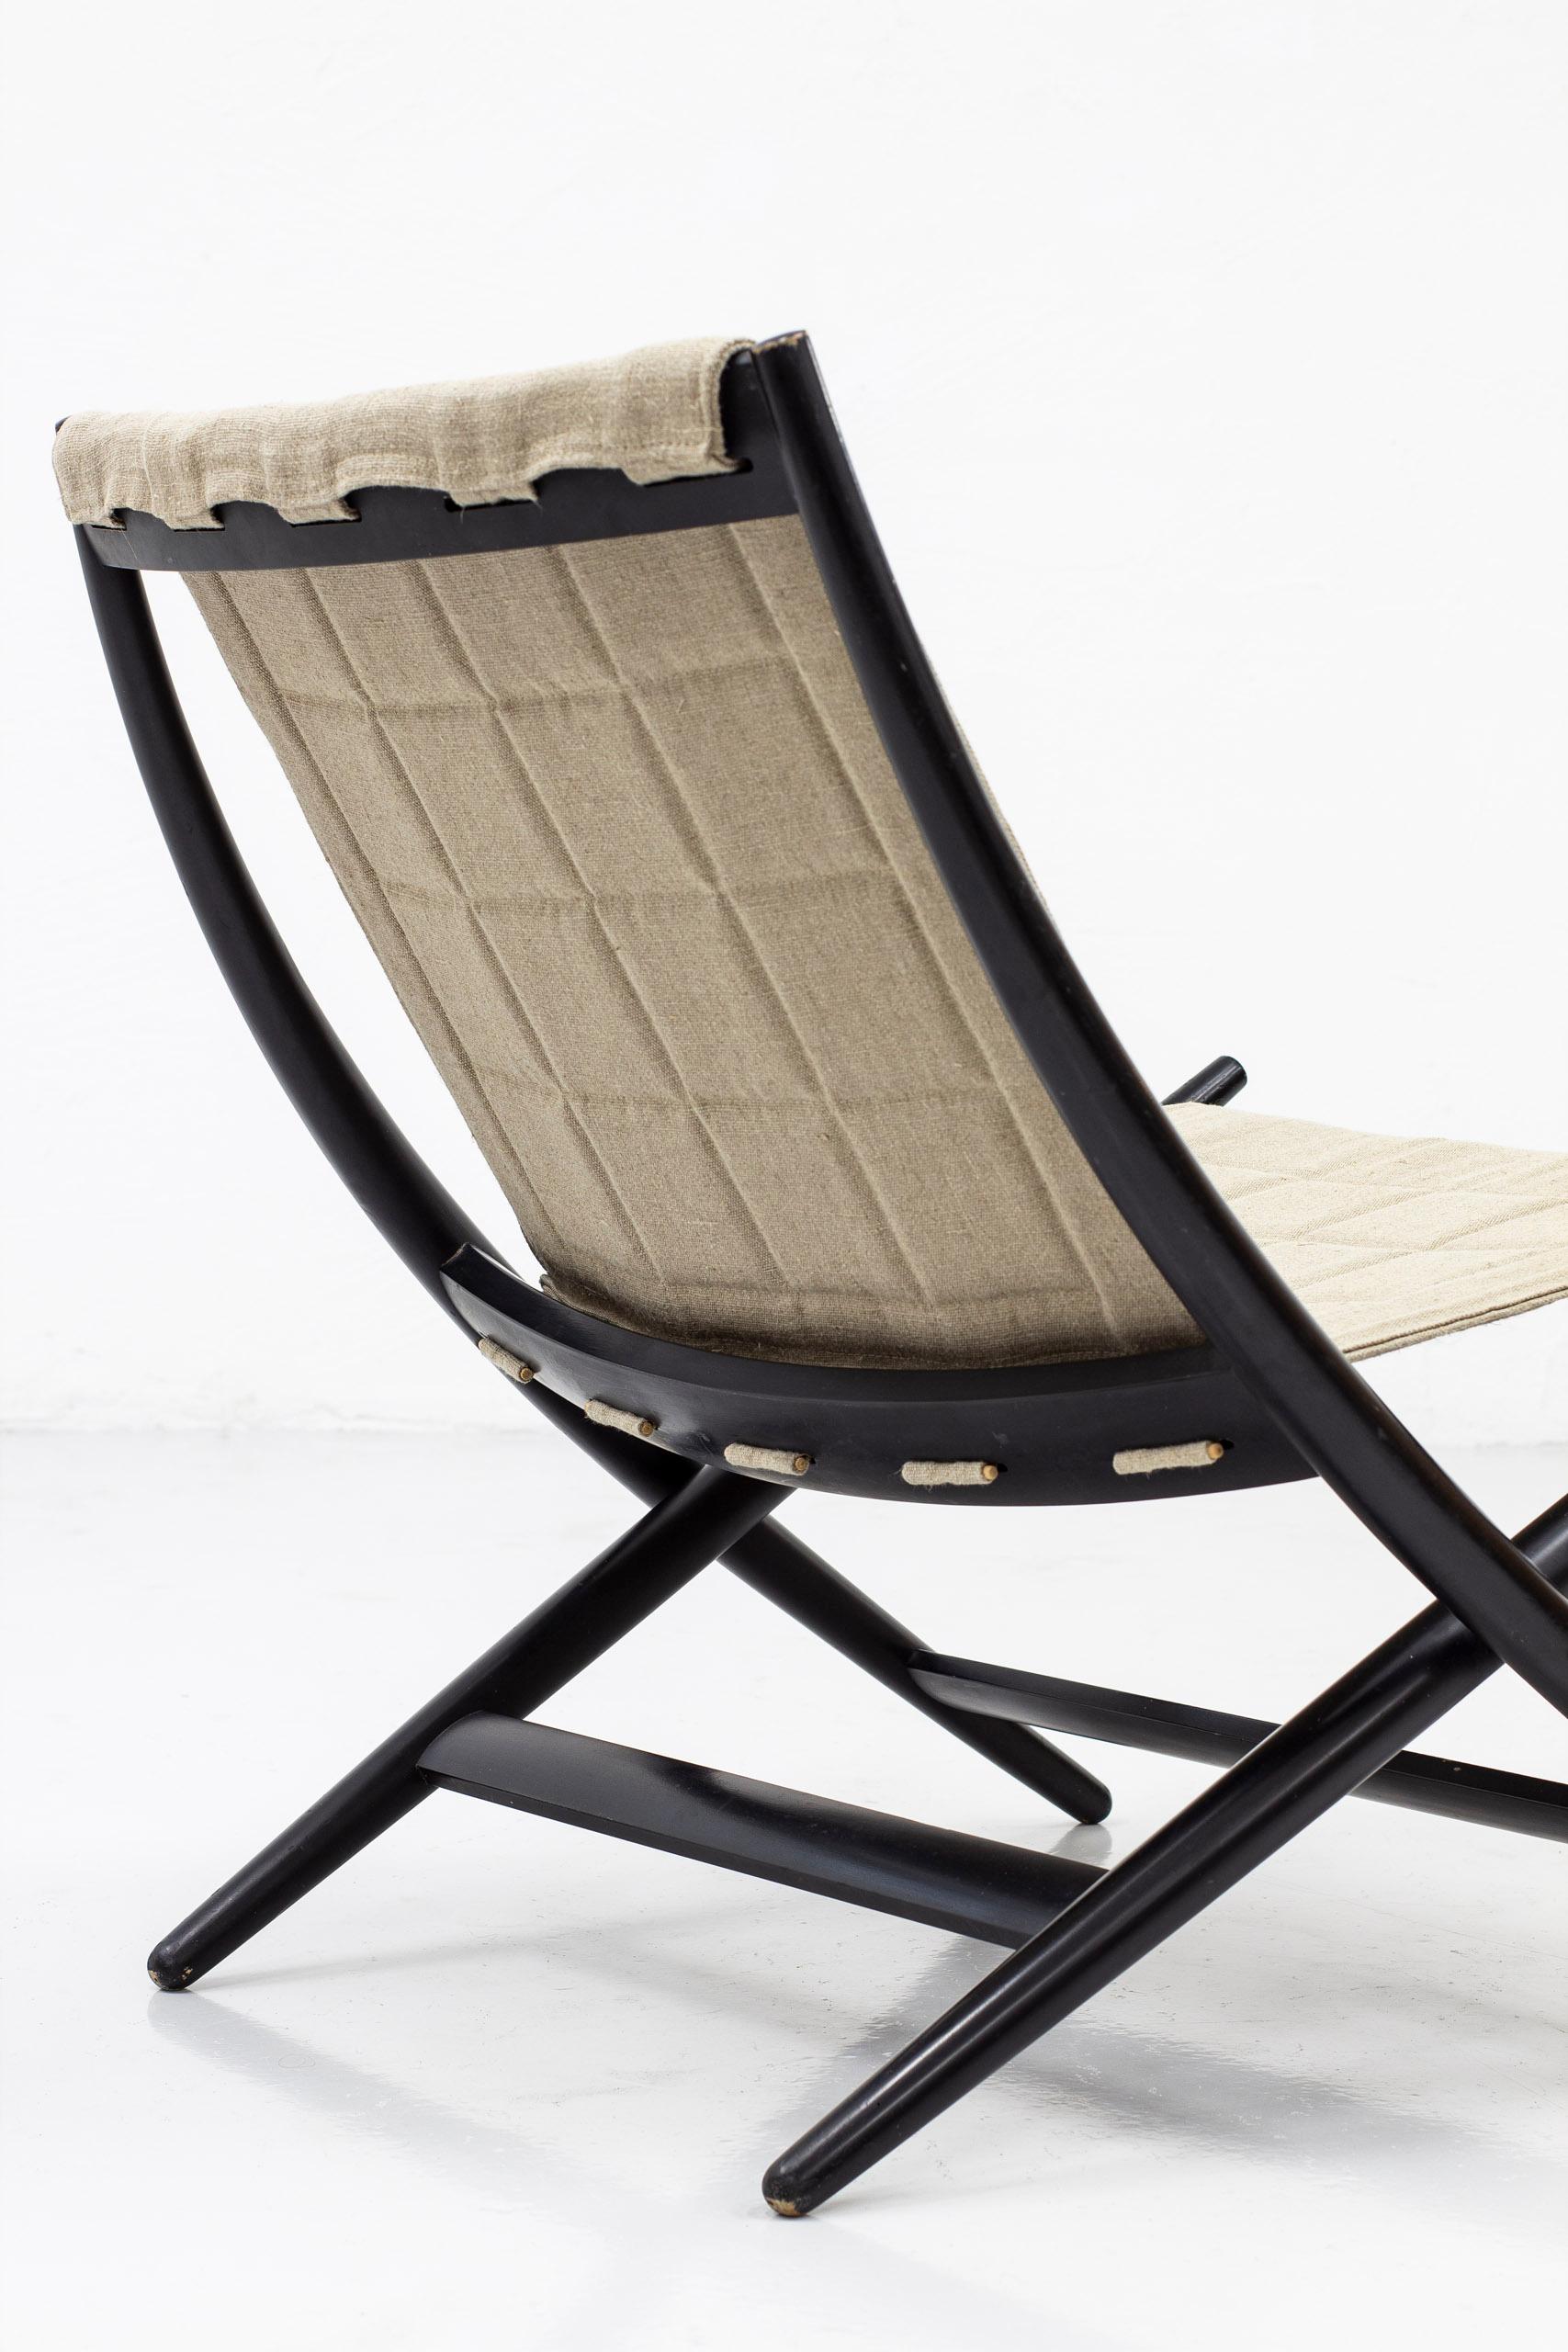 Mid-20th Century Danish Modern Folding Chair by John Hagen and Cabinetmaker I Christiansen